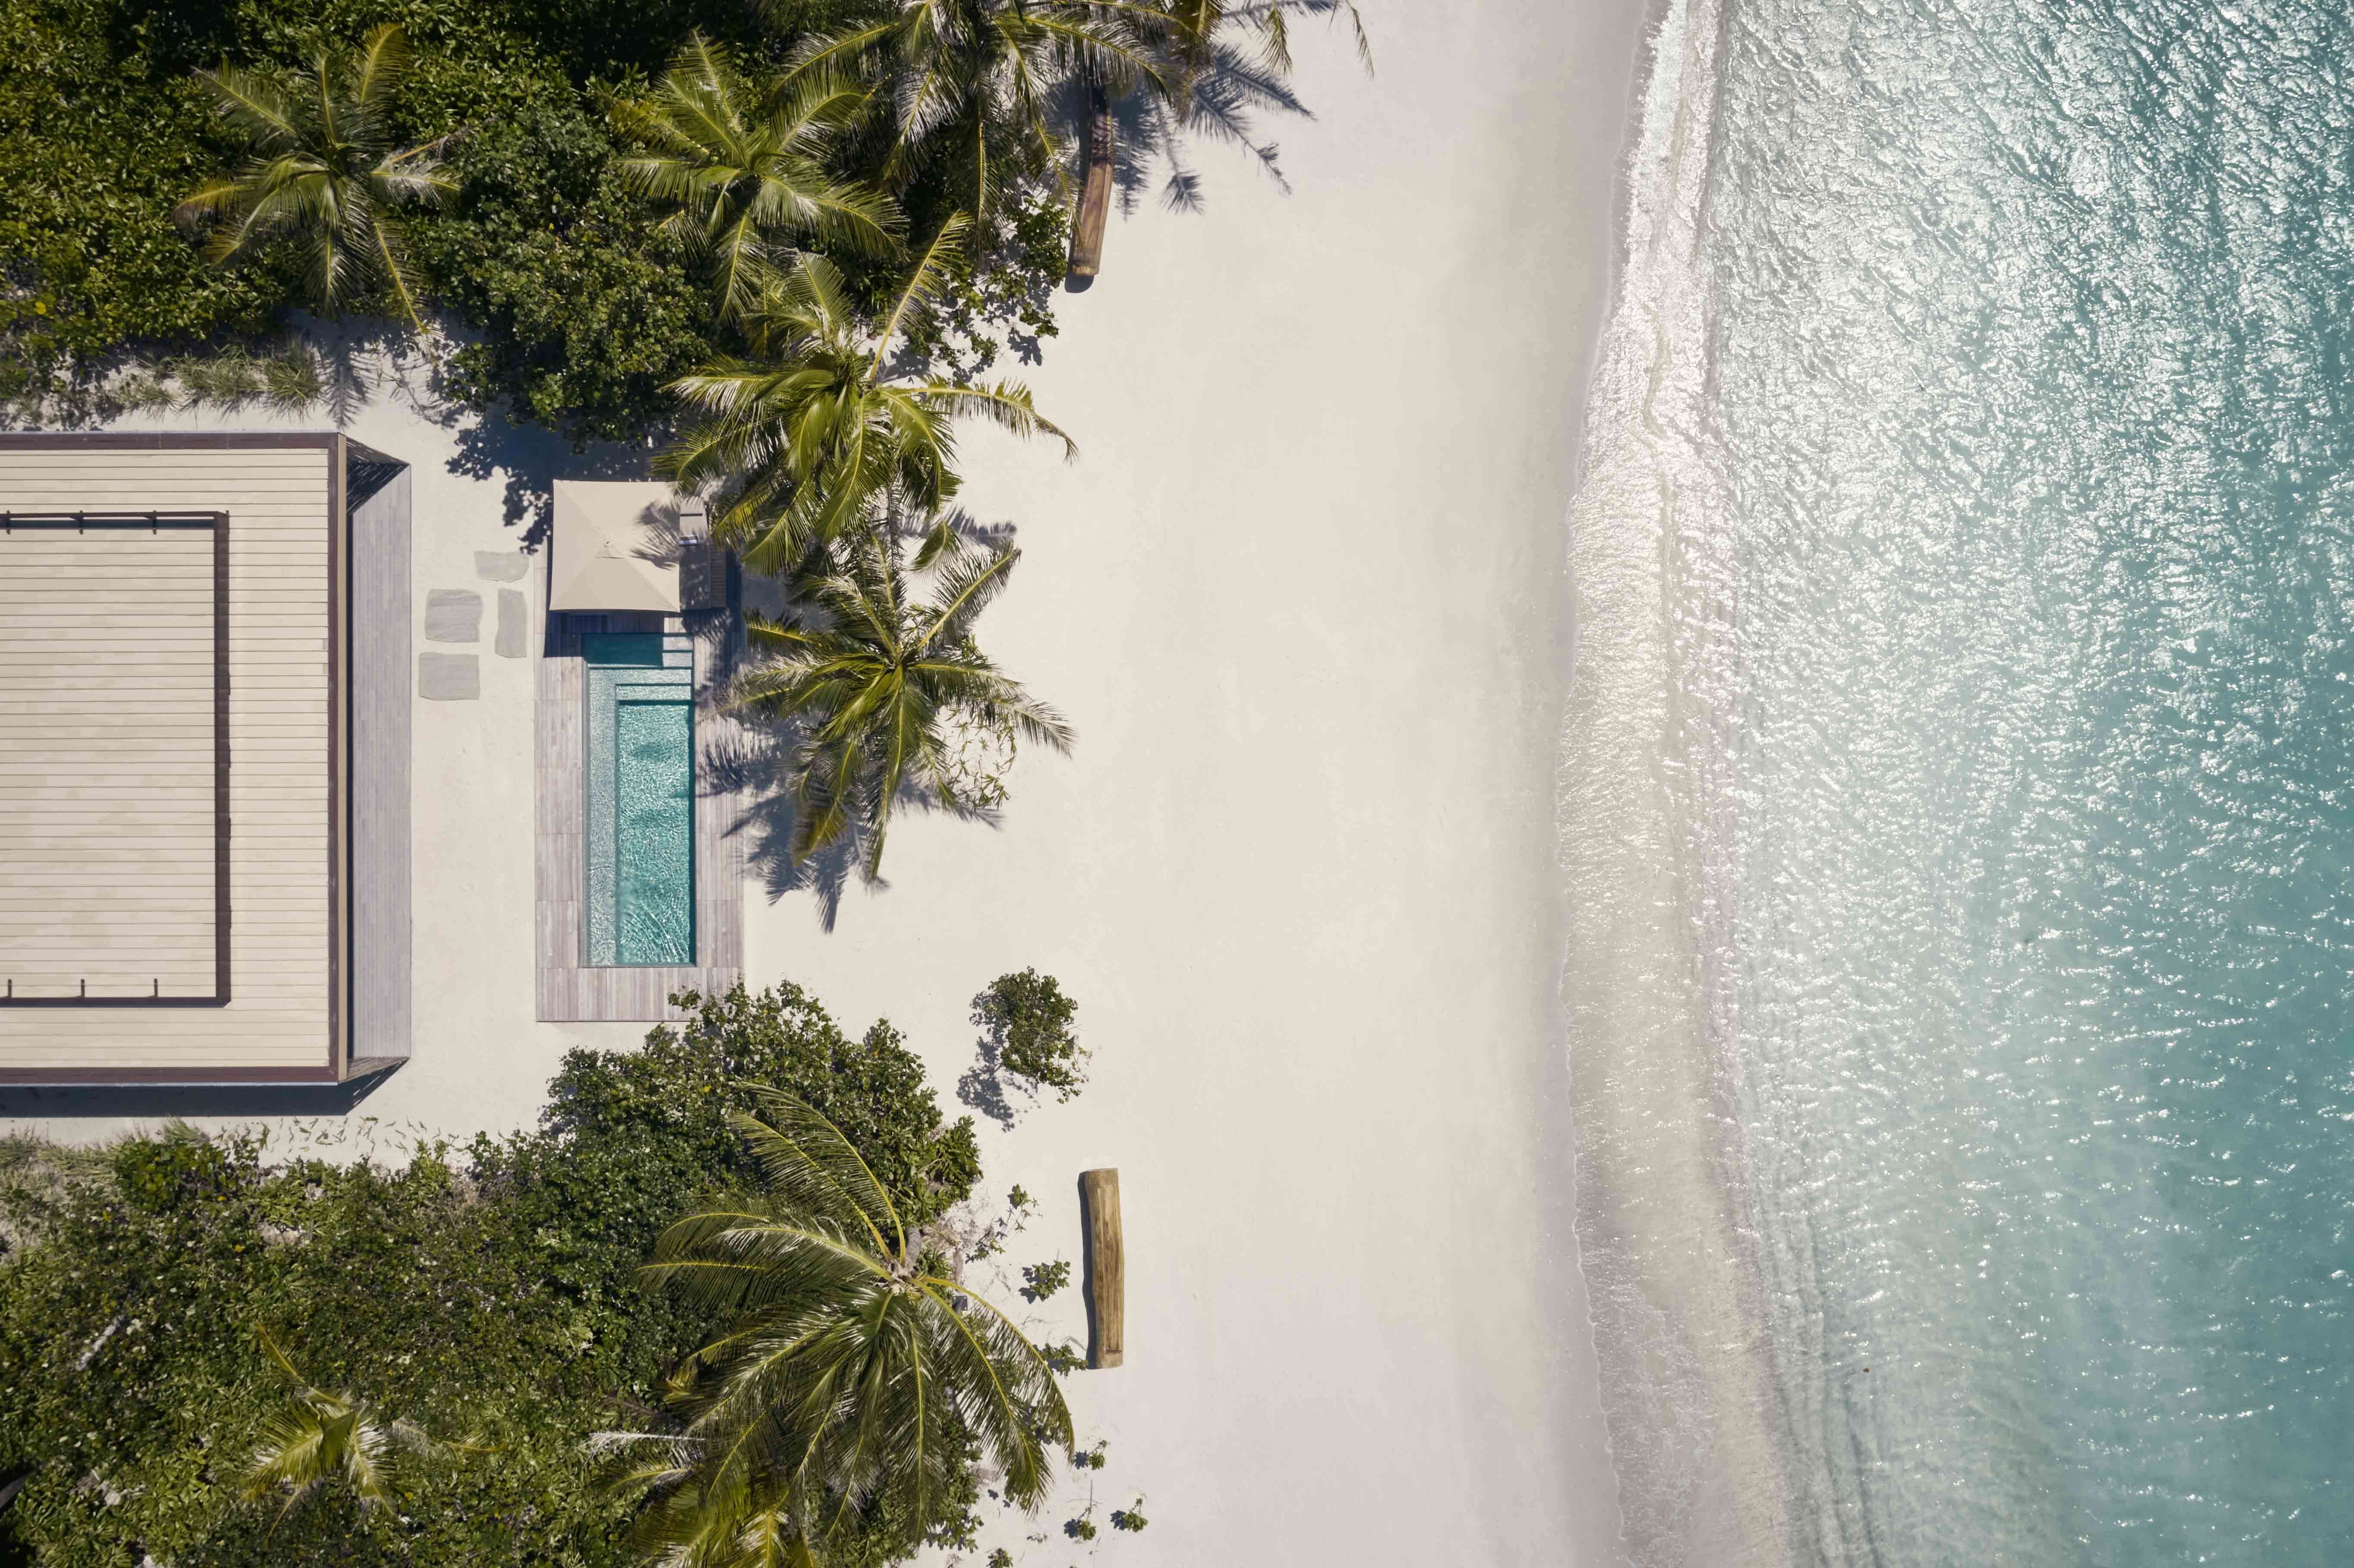 1-Bedroom Sunset Beach Pool Villas, Patina Maldives Fari Island 5*